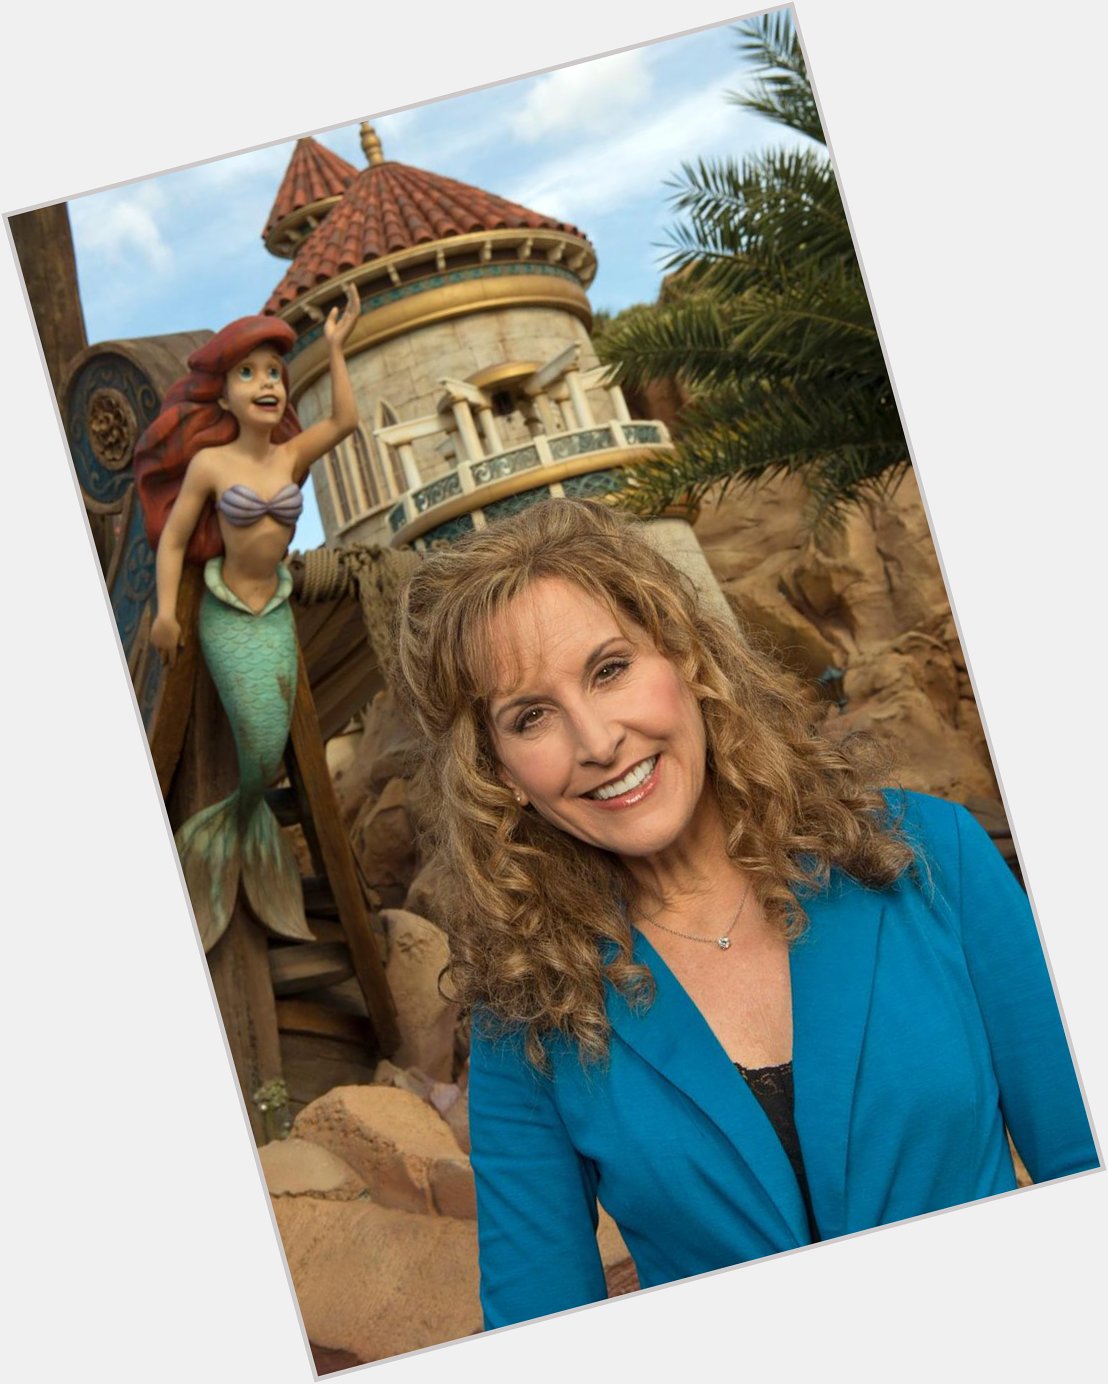 Happy Birthday to singer & actress Jodi Benson, the voice of Ariel in Disney\s The Little Mermaid! 